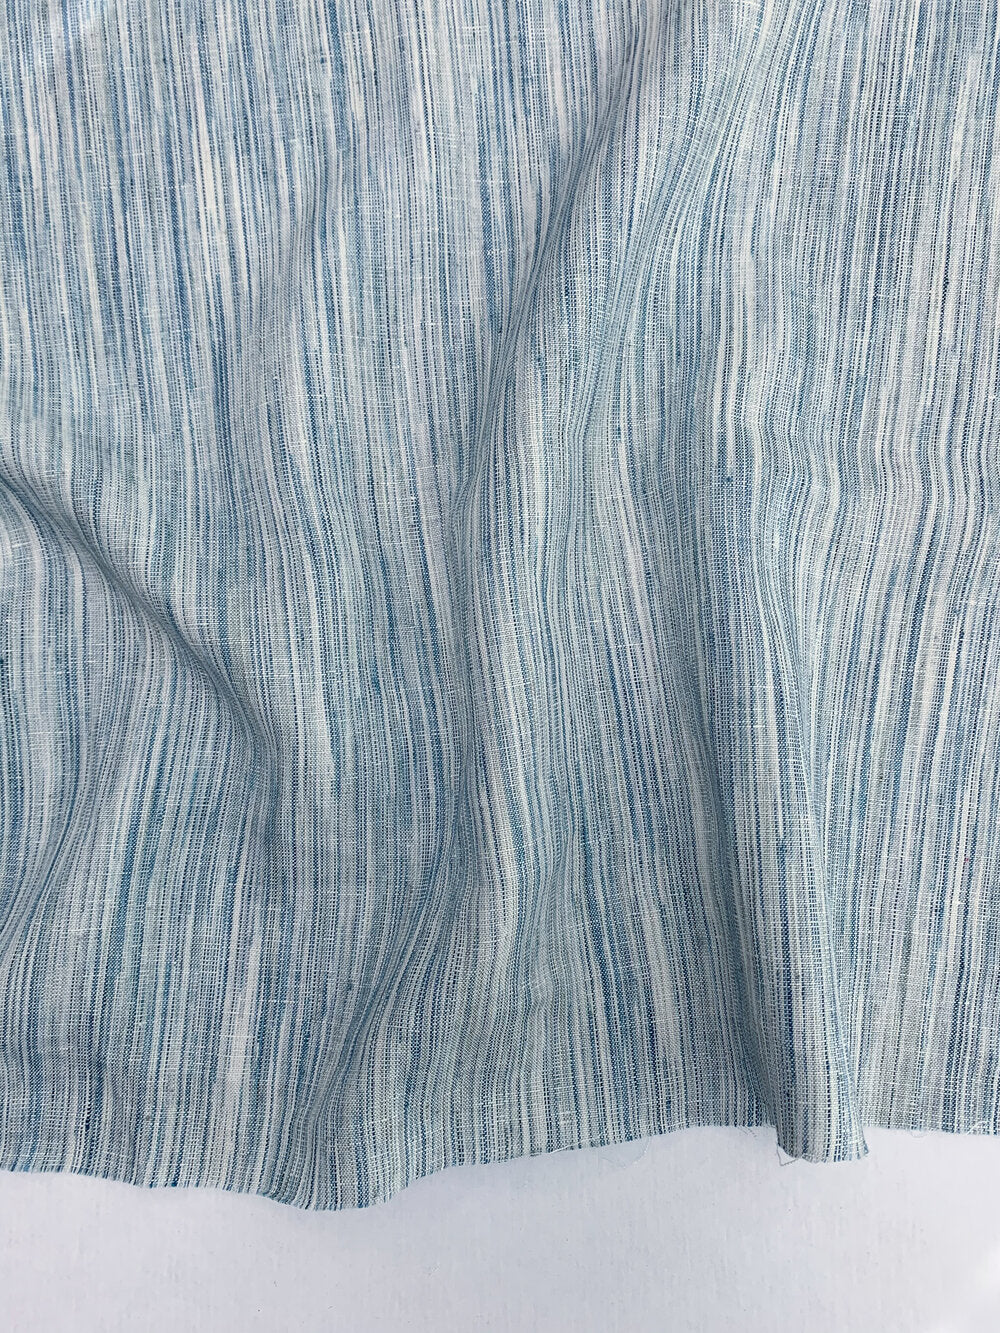 Savona 100% Linen in Blue — Fabric Spark